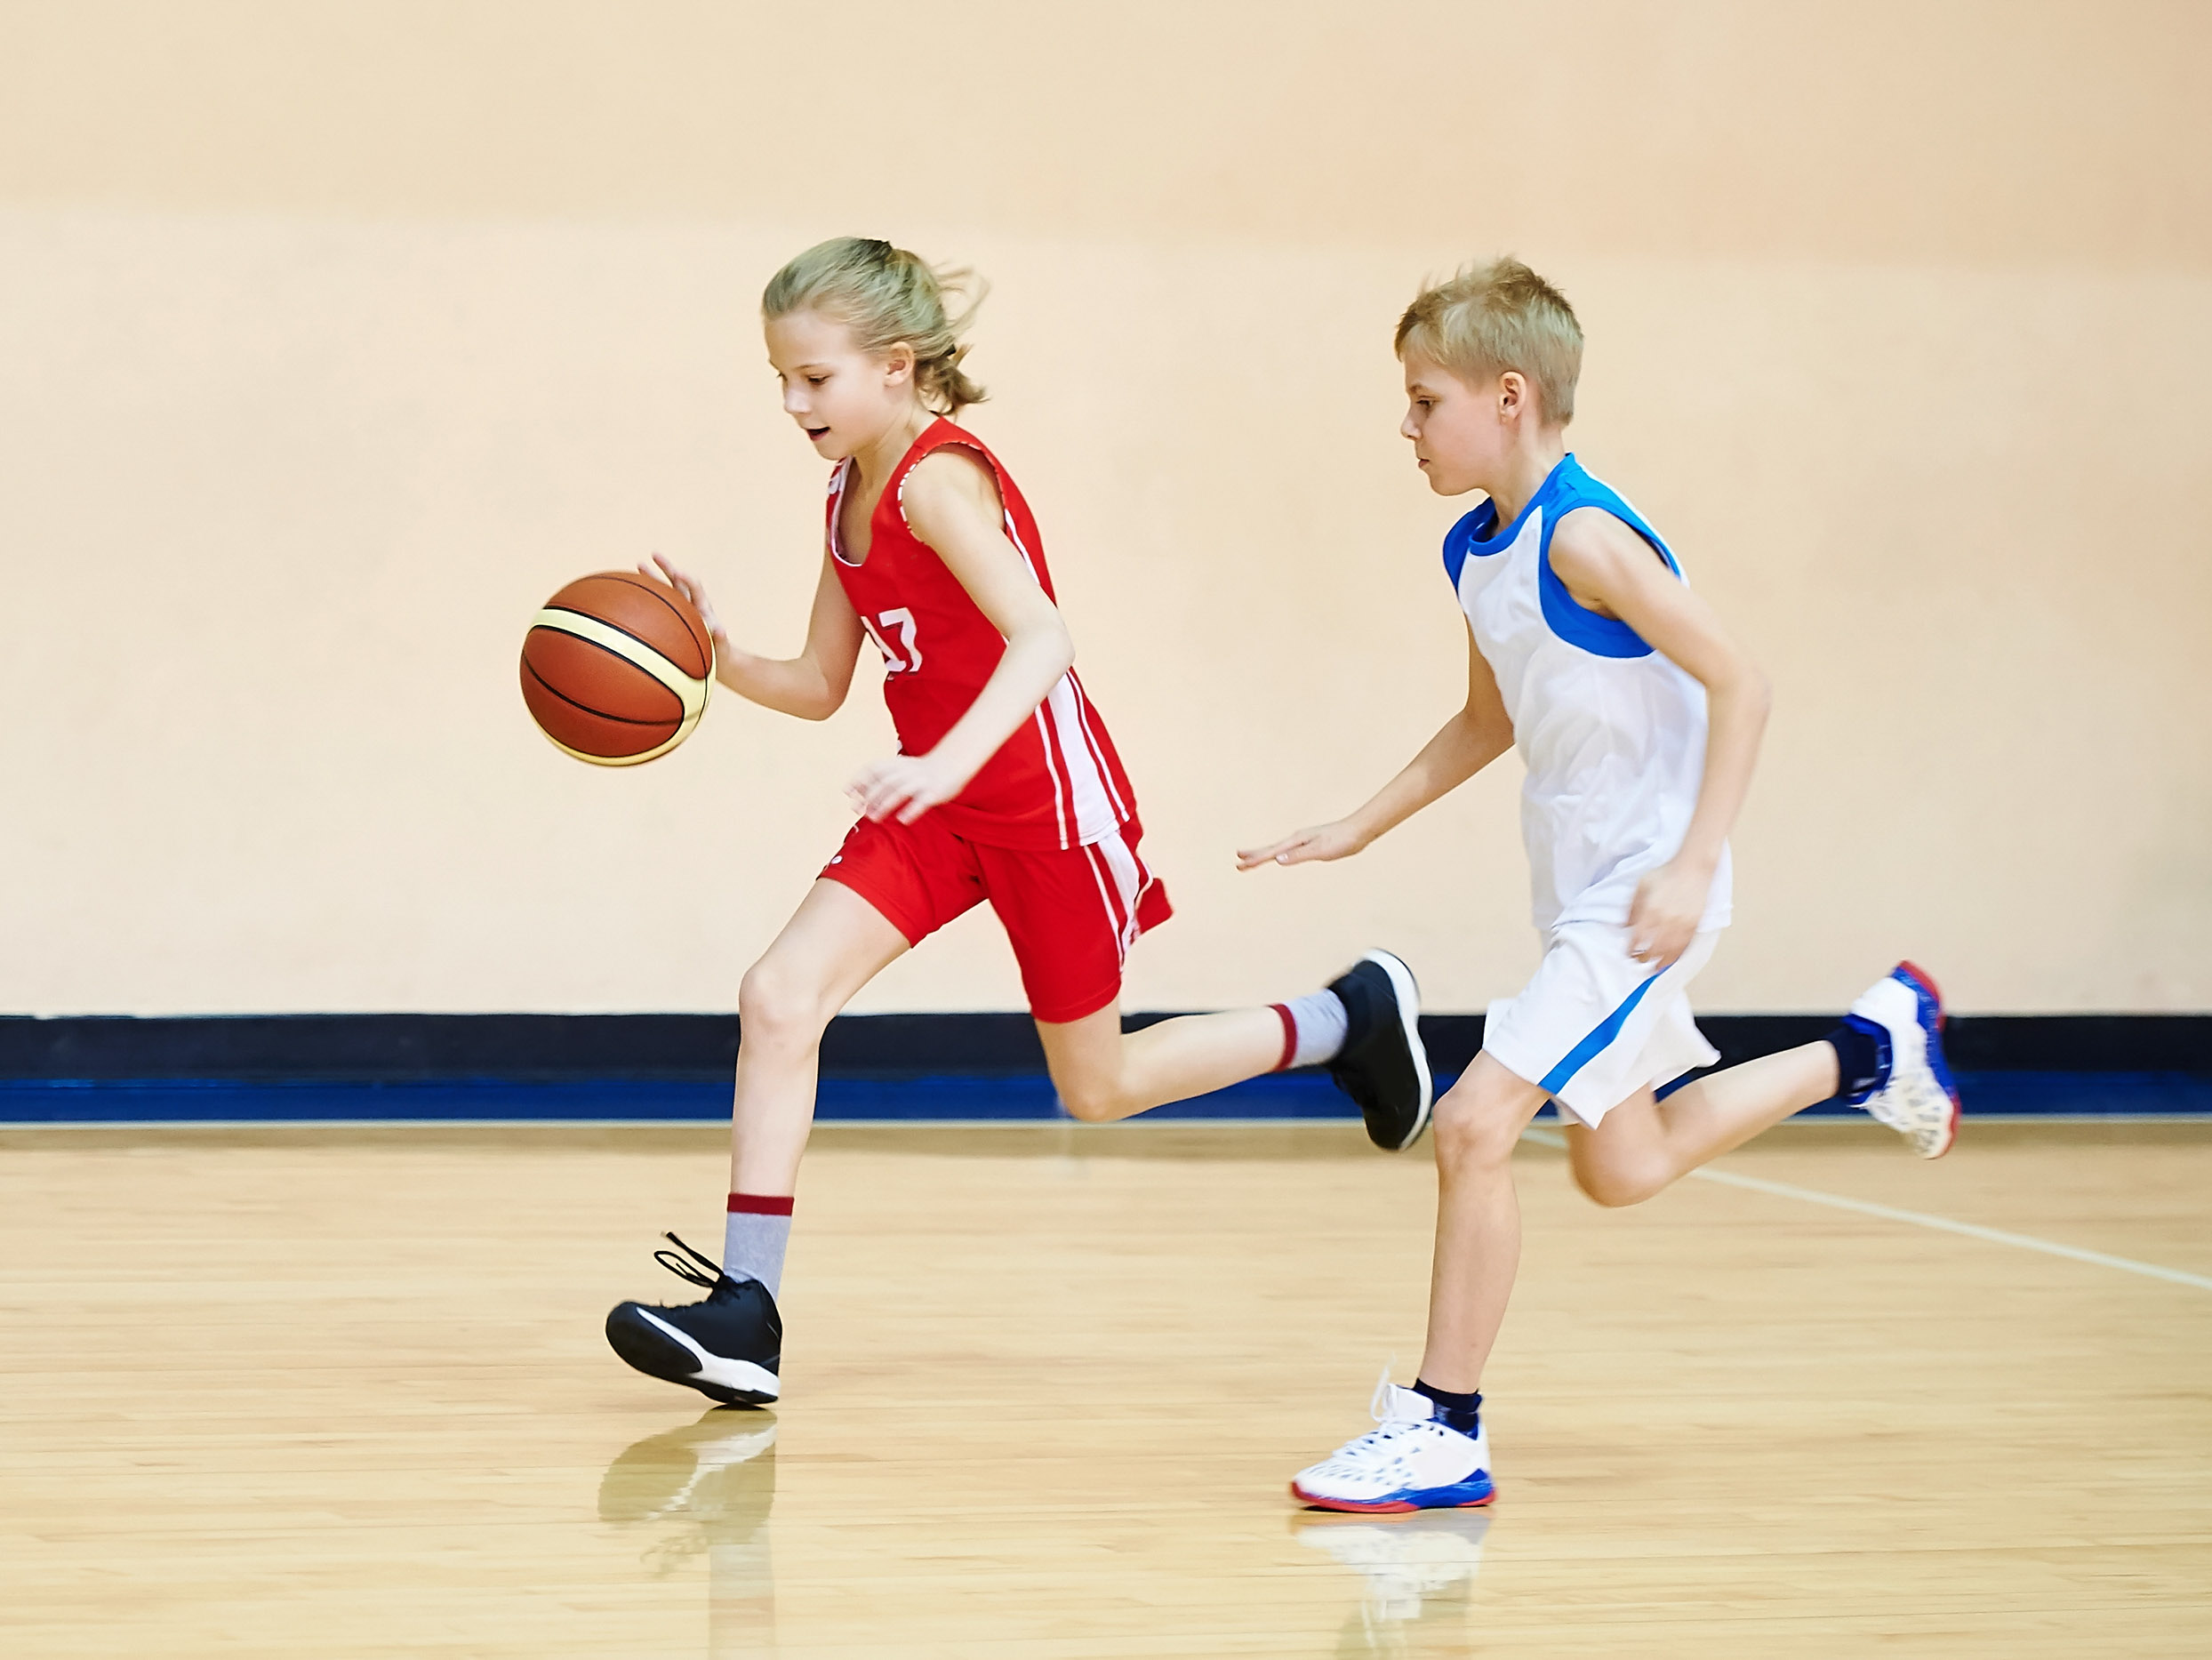 Two kids playing basketball.